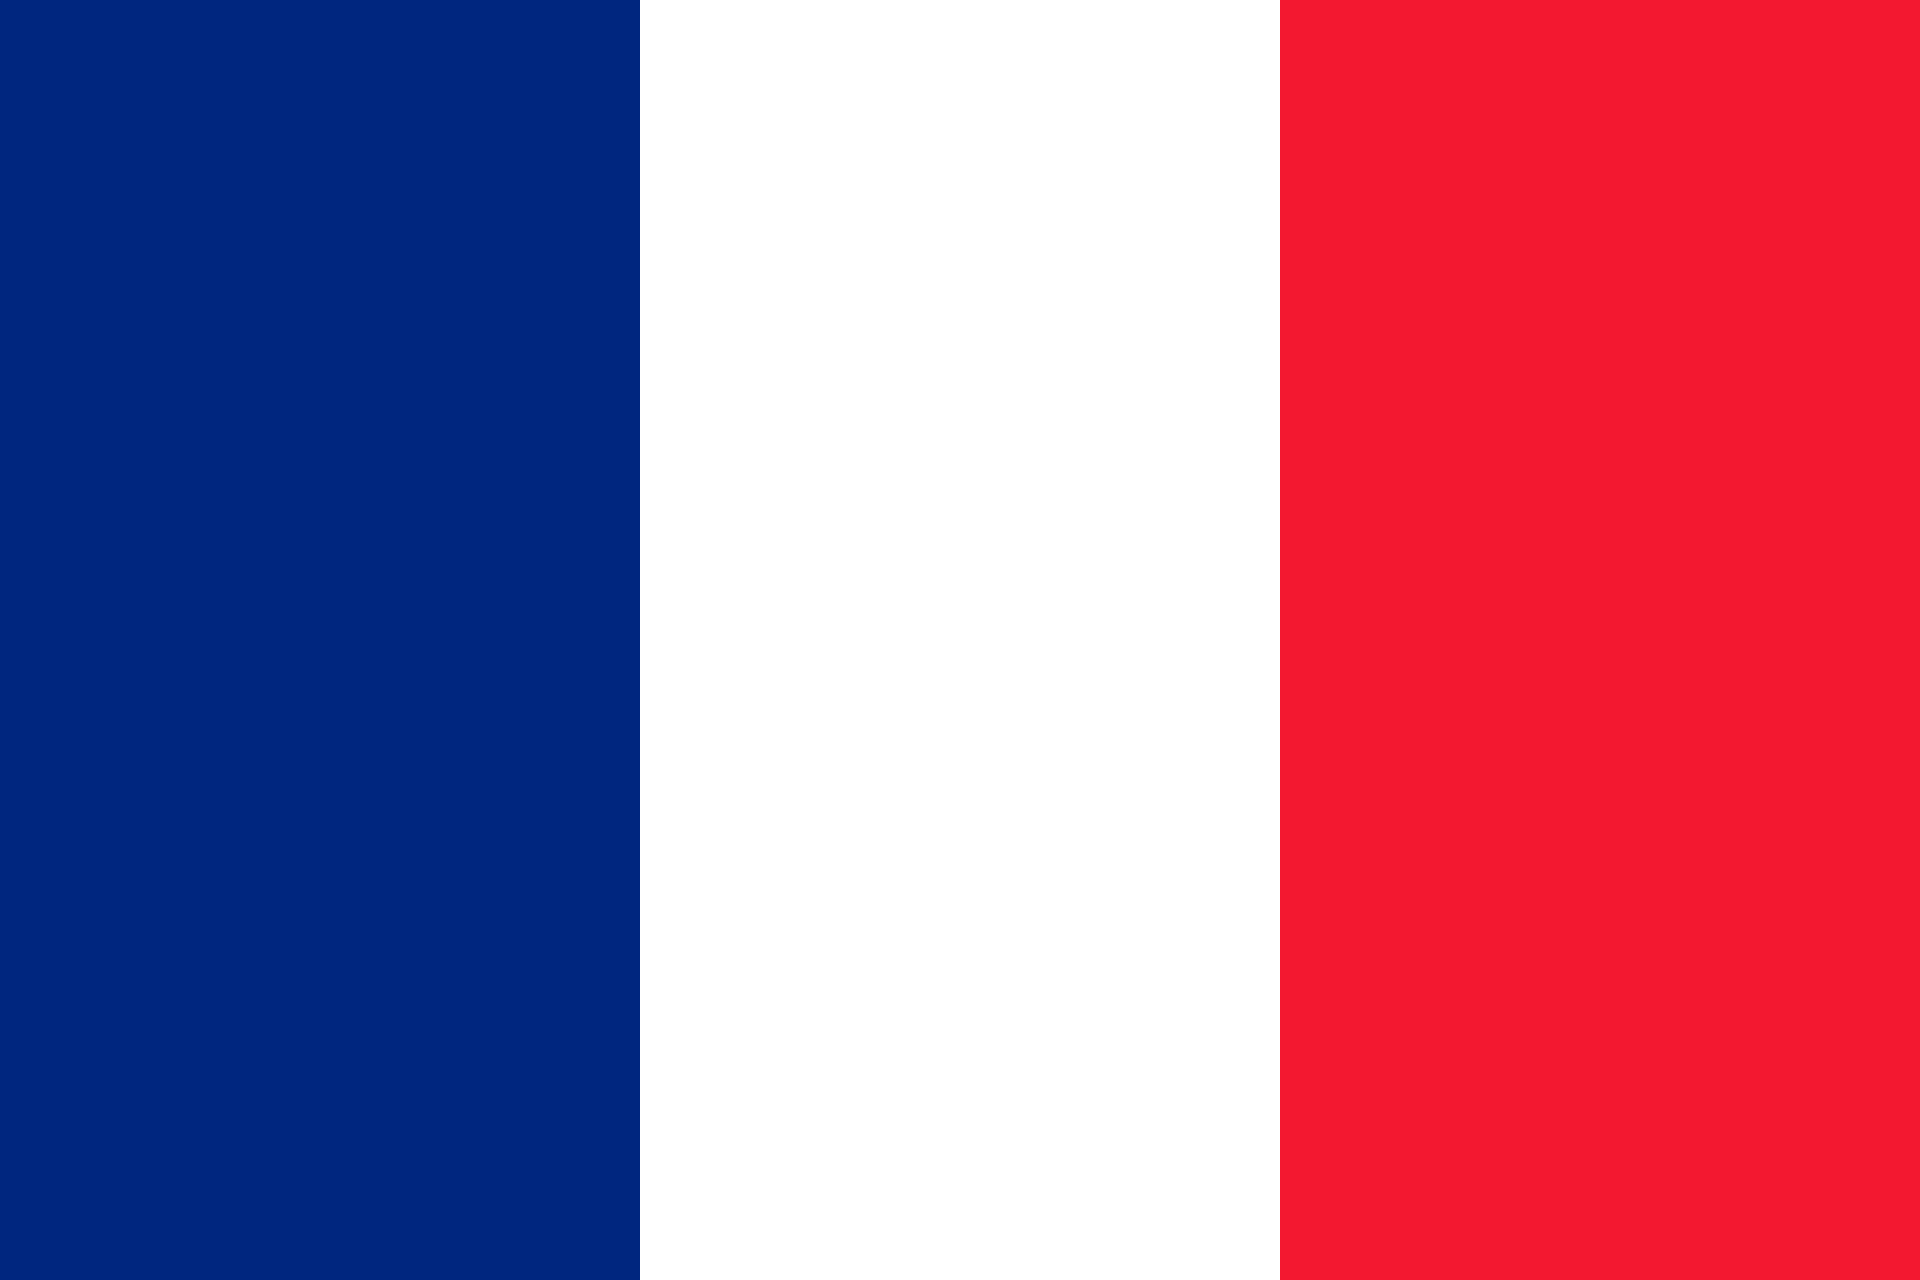 France flag - Amazon shop - Mars EC